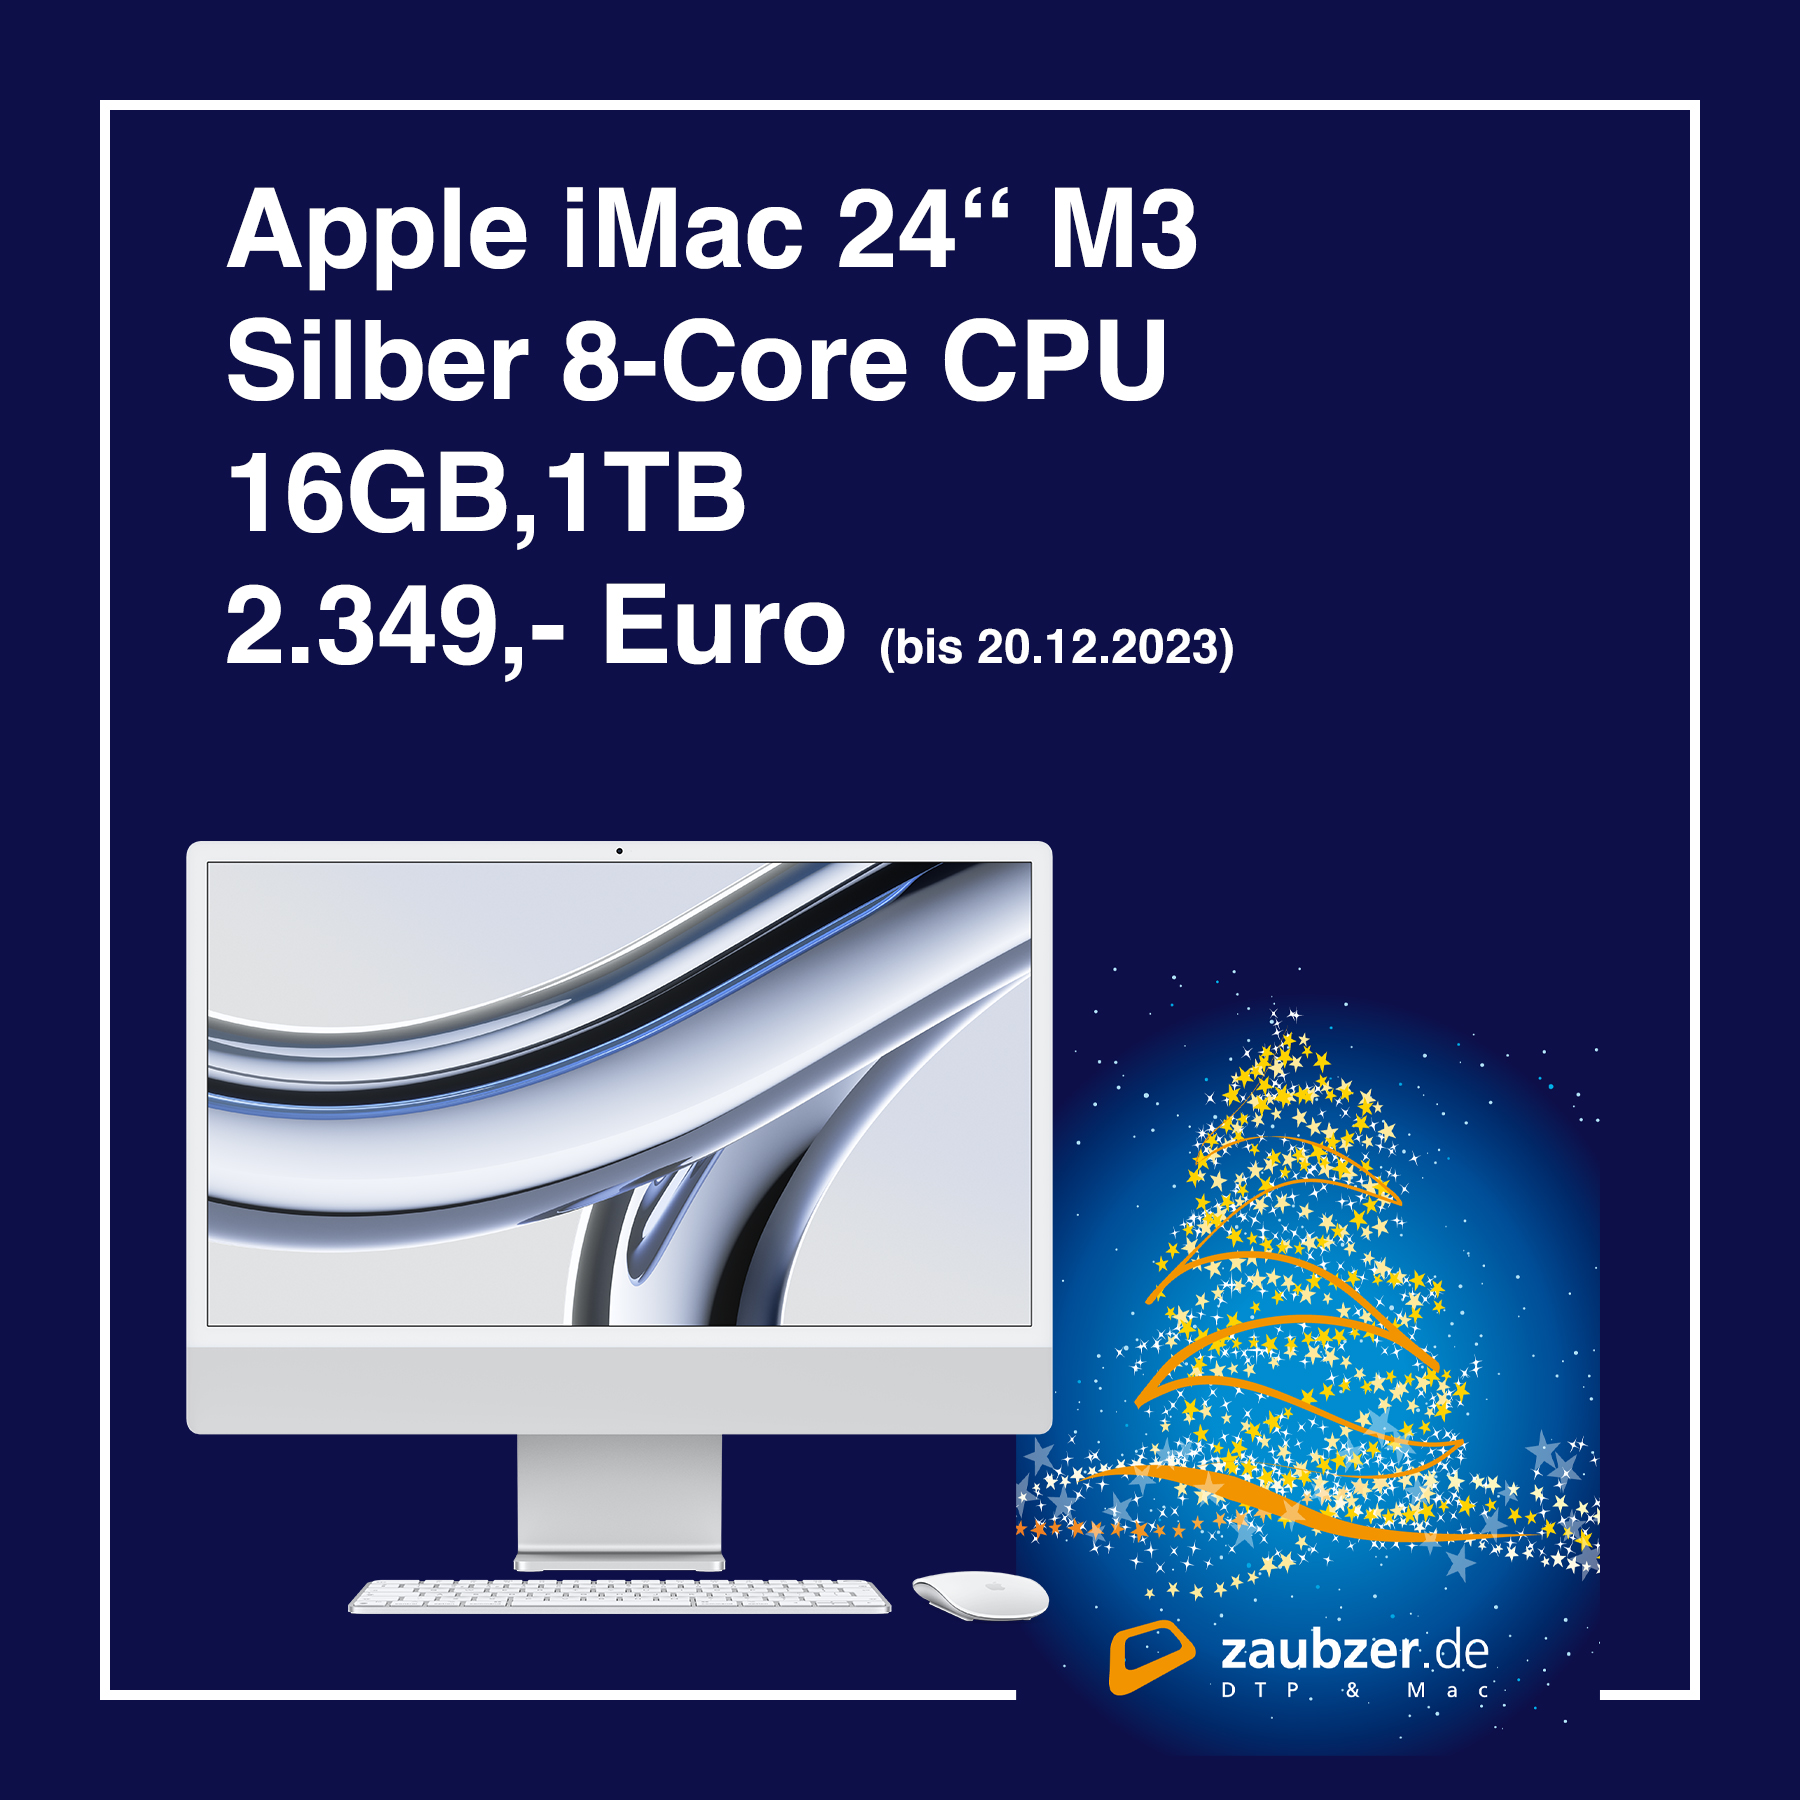 Apple iMac M3 - Weihnachtsaktion - zaubzer.de Mannheim